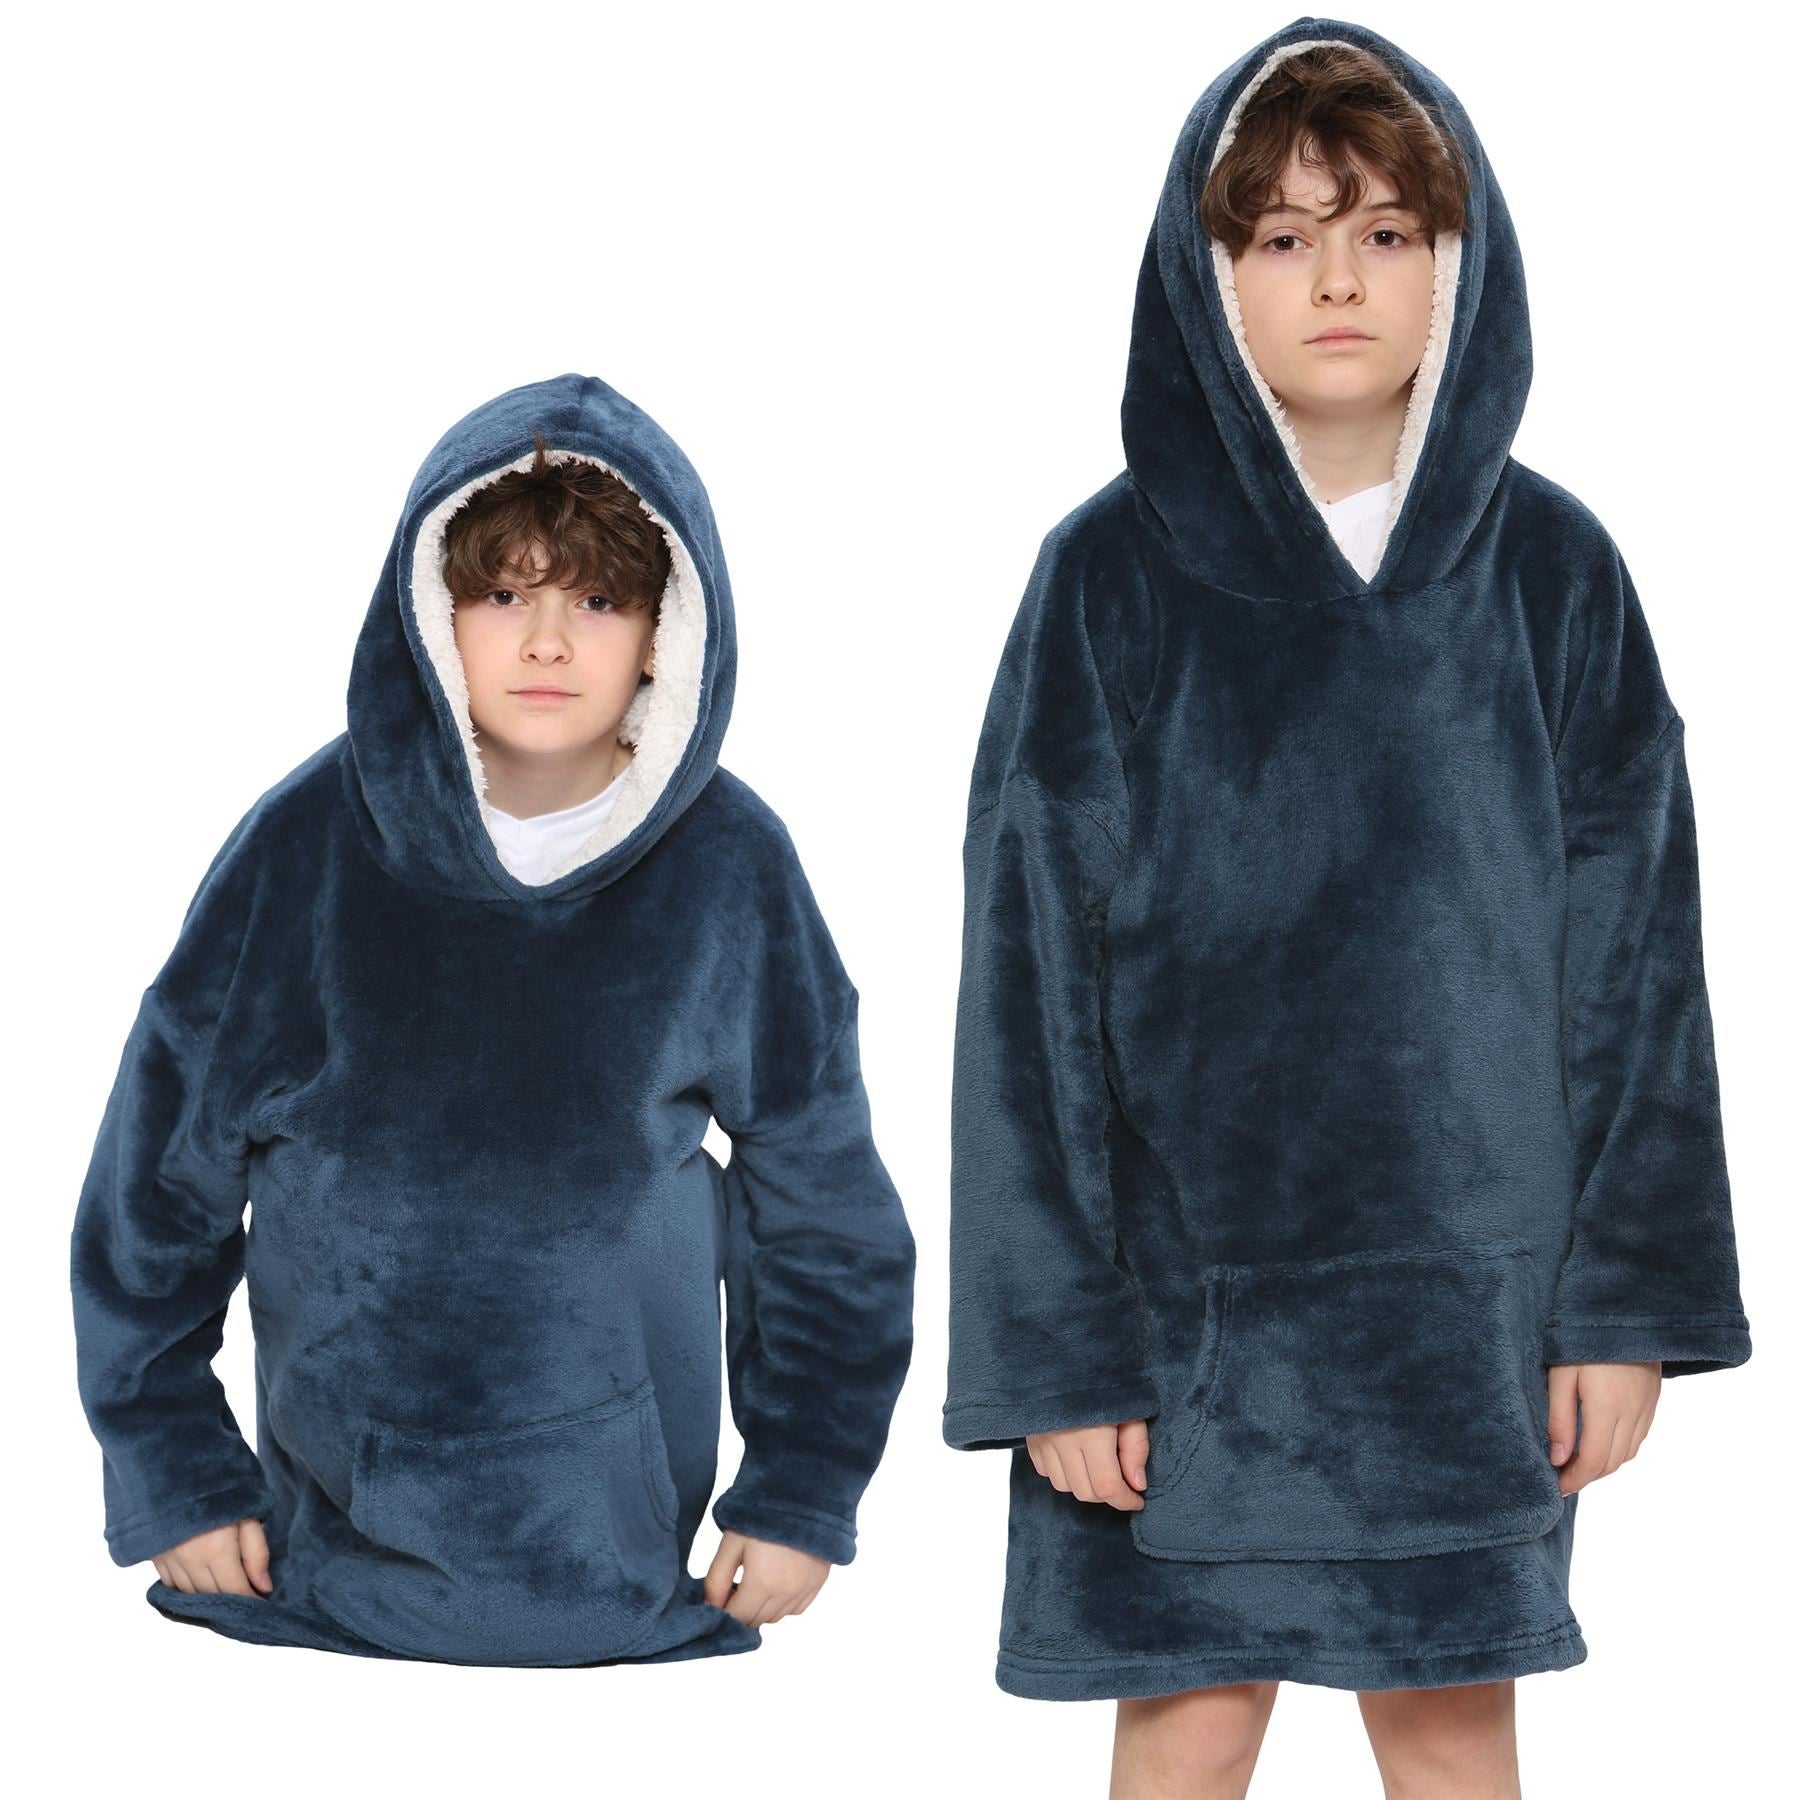 Kids Unisex Oversized Hoodie Navy Snuggle Blanket Super Soft Warm Fleece